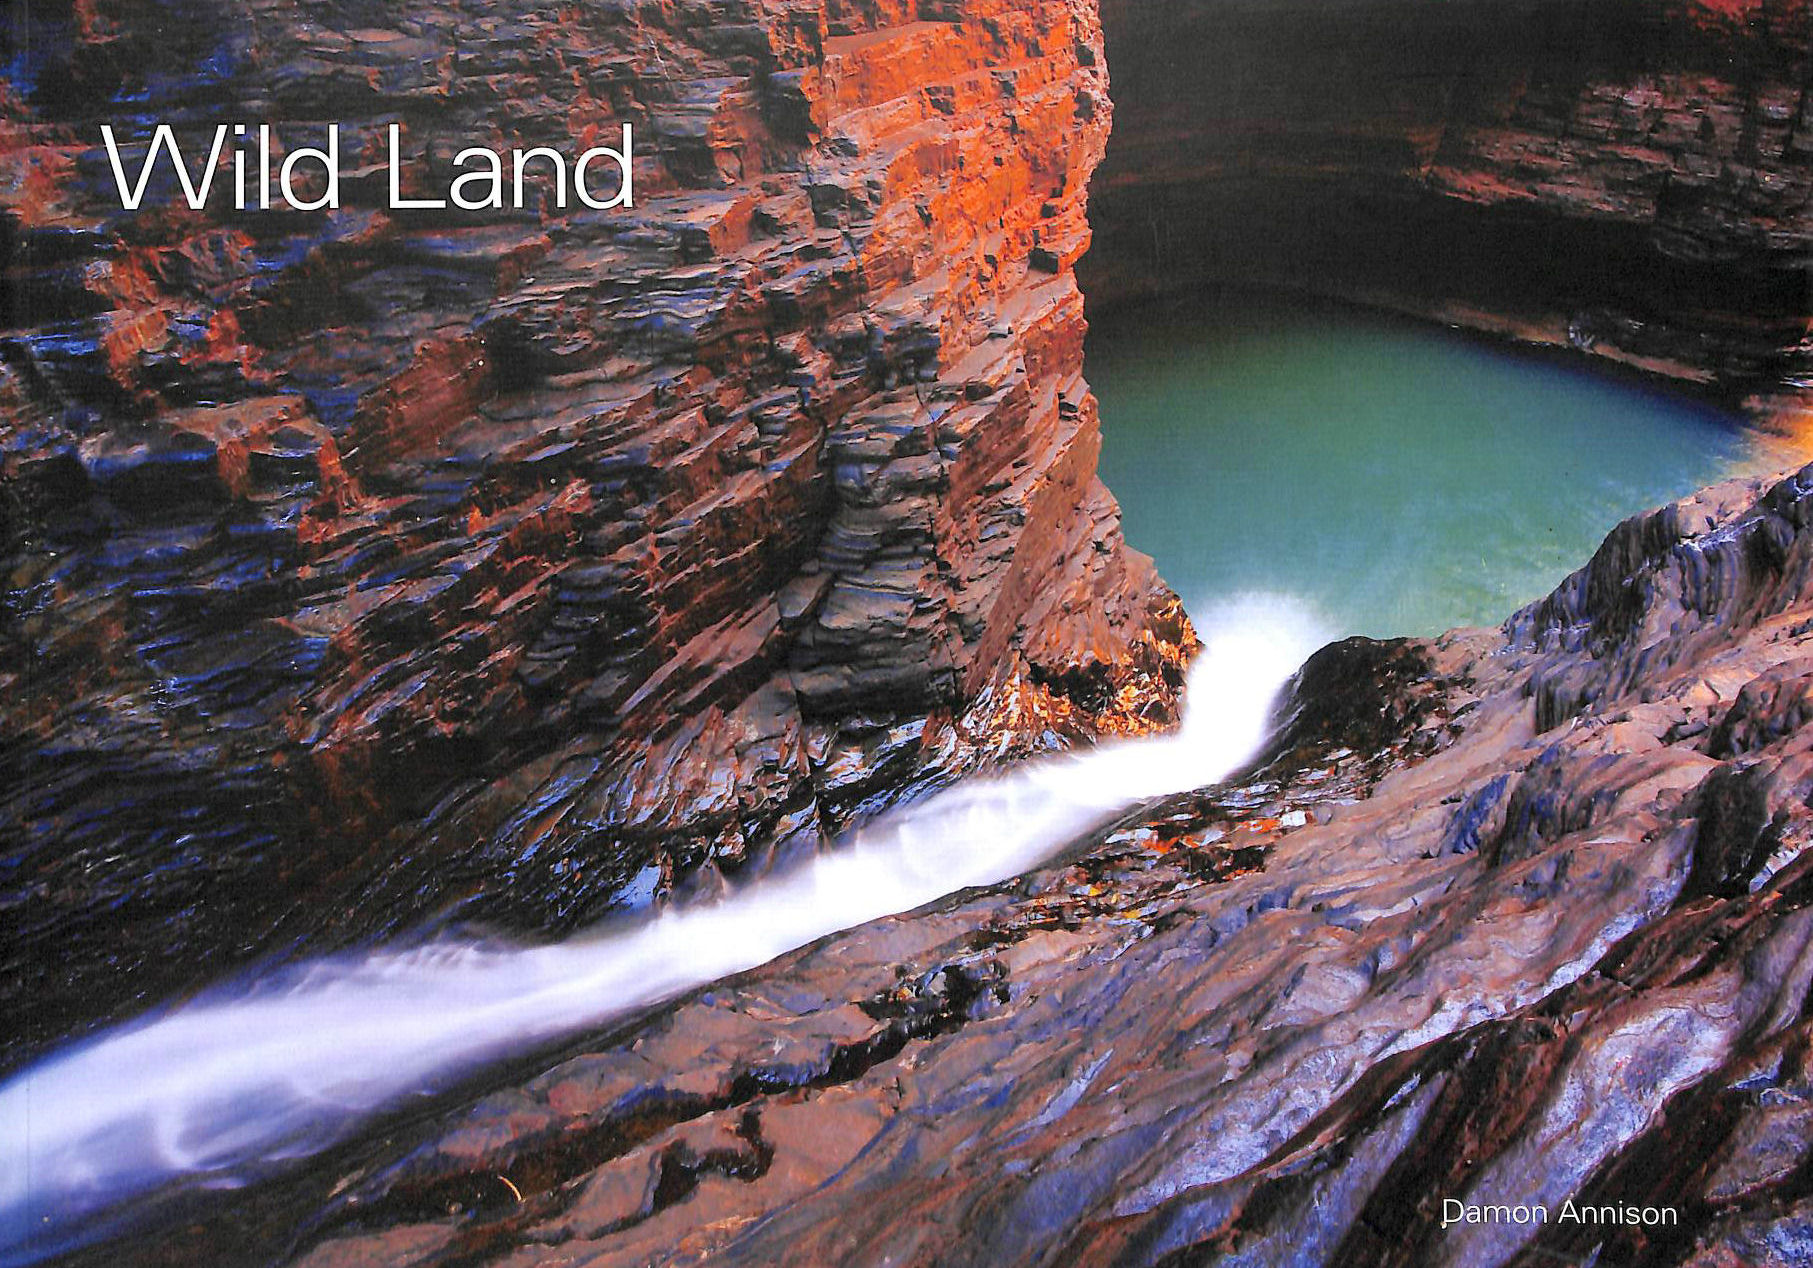 DAMON ANNISON - Wild Land: A Photographic Tour of Western Australia